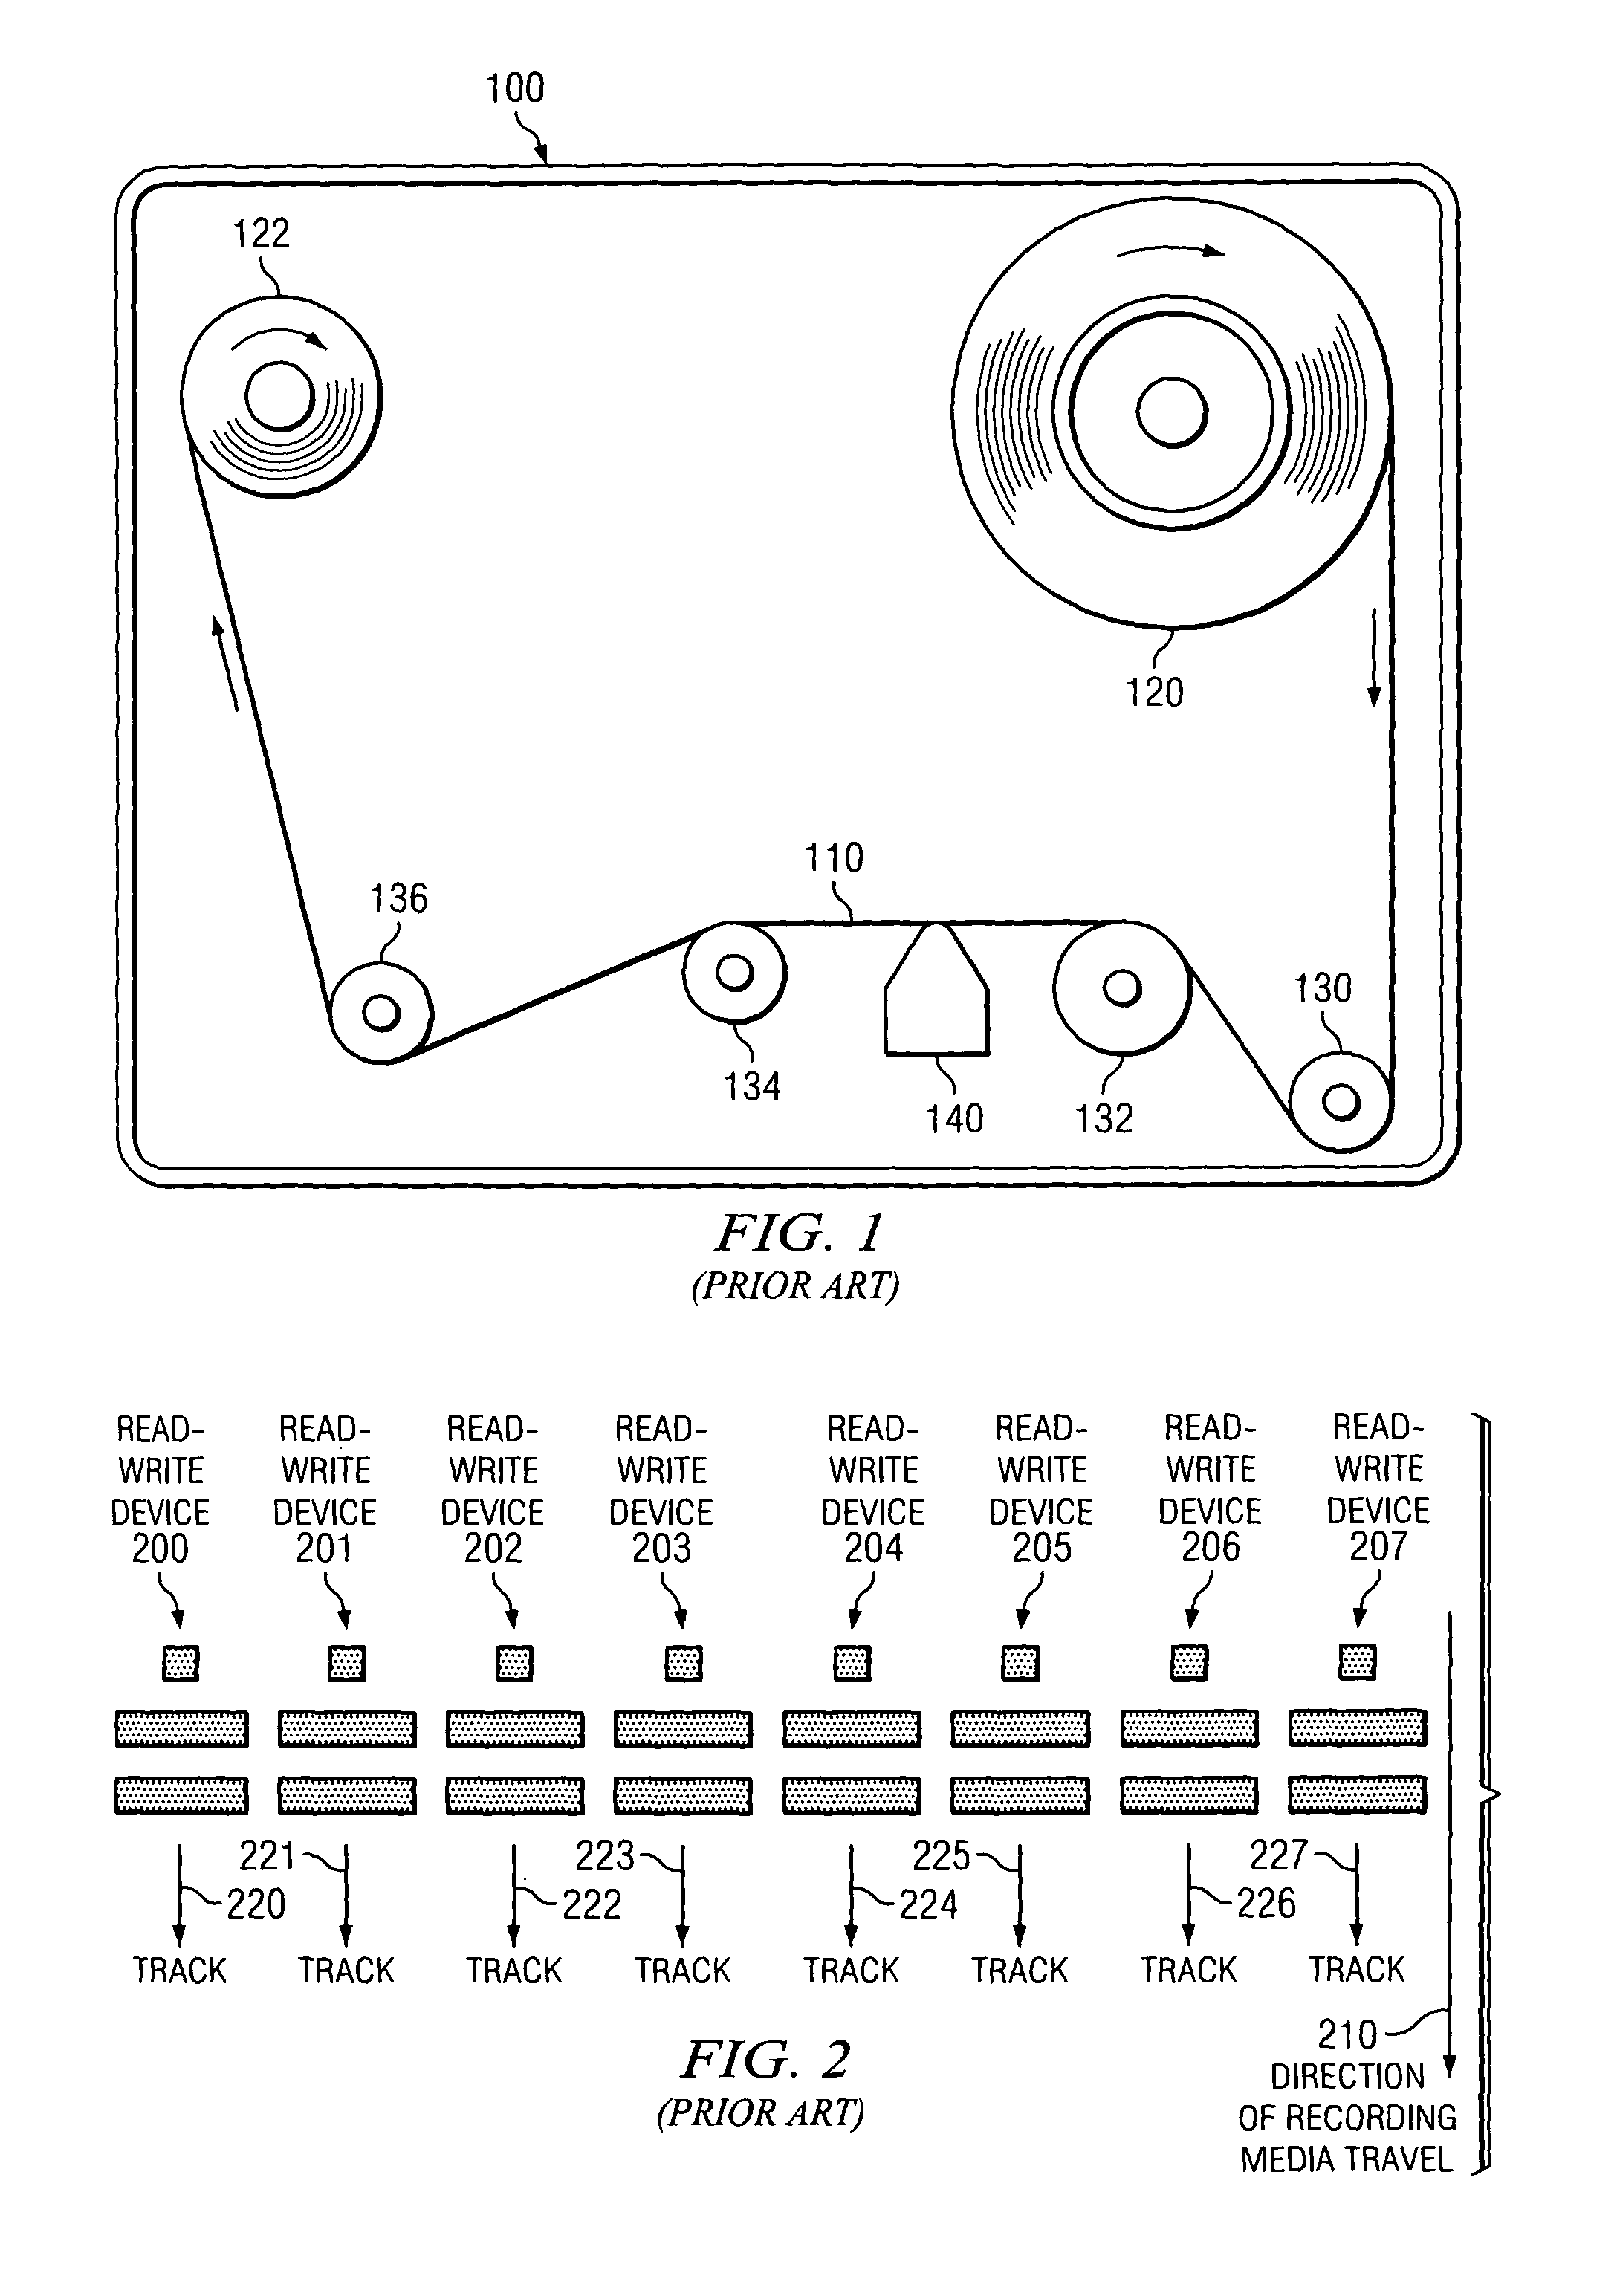 Multi-level, multi-track magnetic recording head